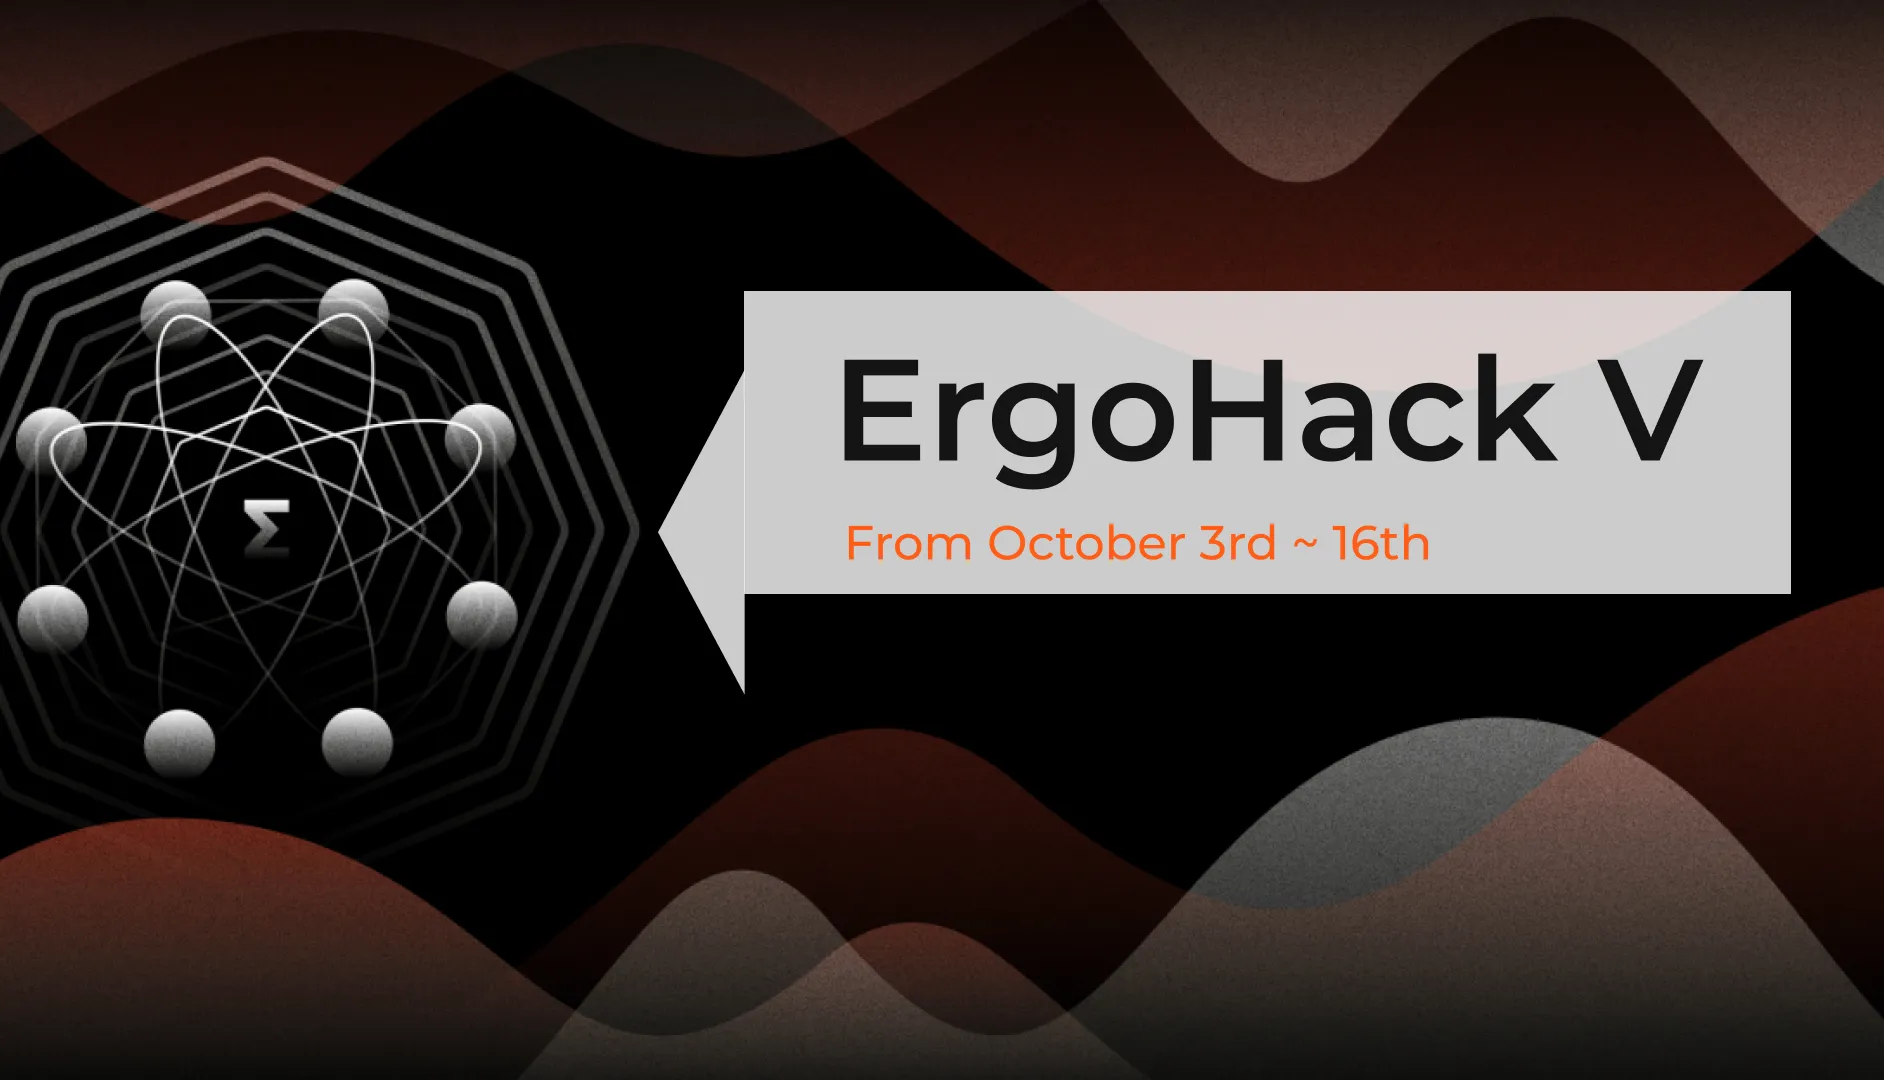 ErgoHack V kicks off on Monday, October 3rd